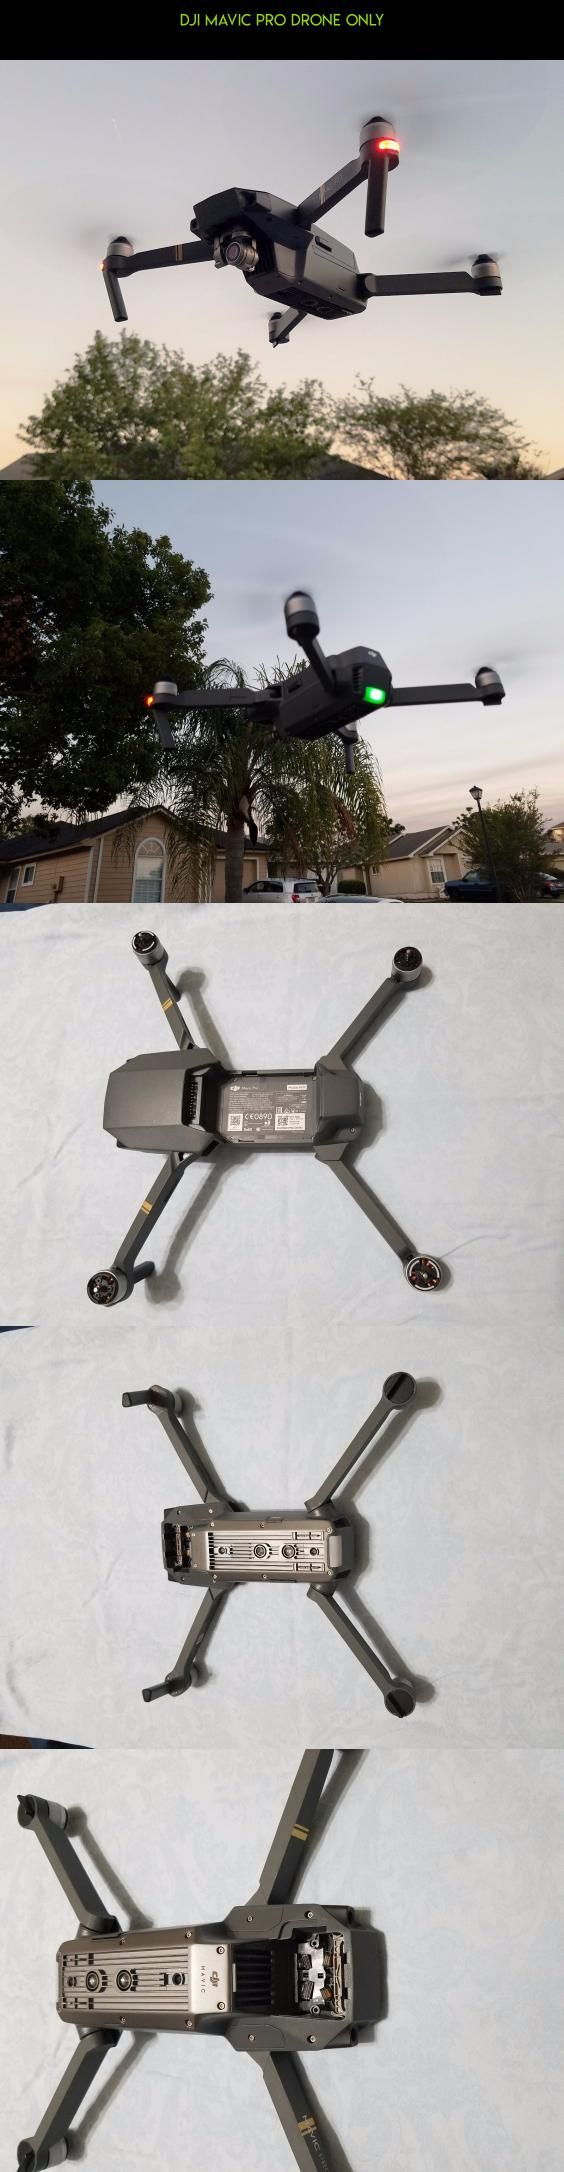 dji mavic pro Drone only #drone #drone #pro #shopping #camera #technology #parts...